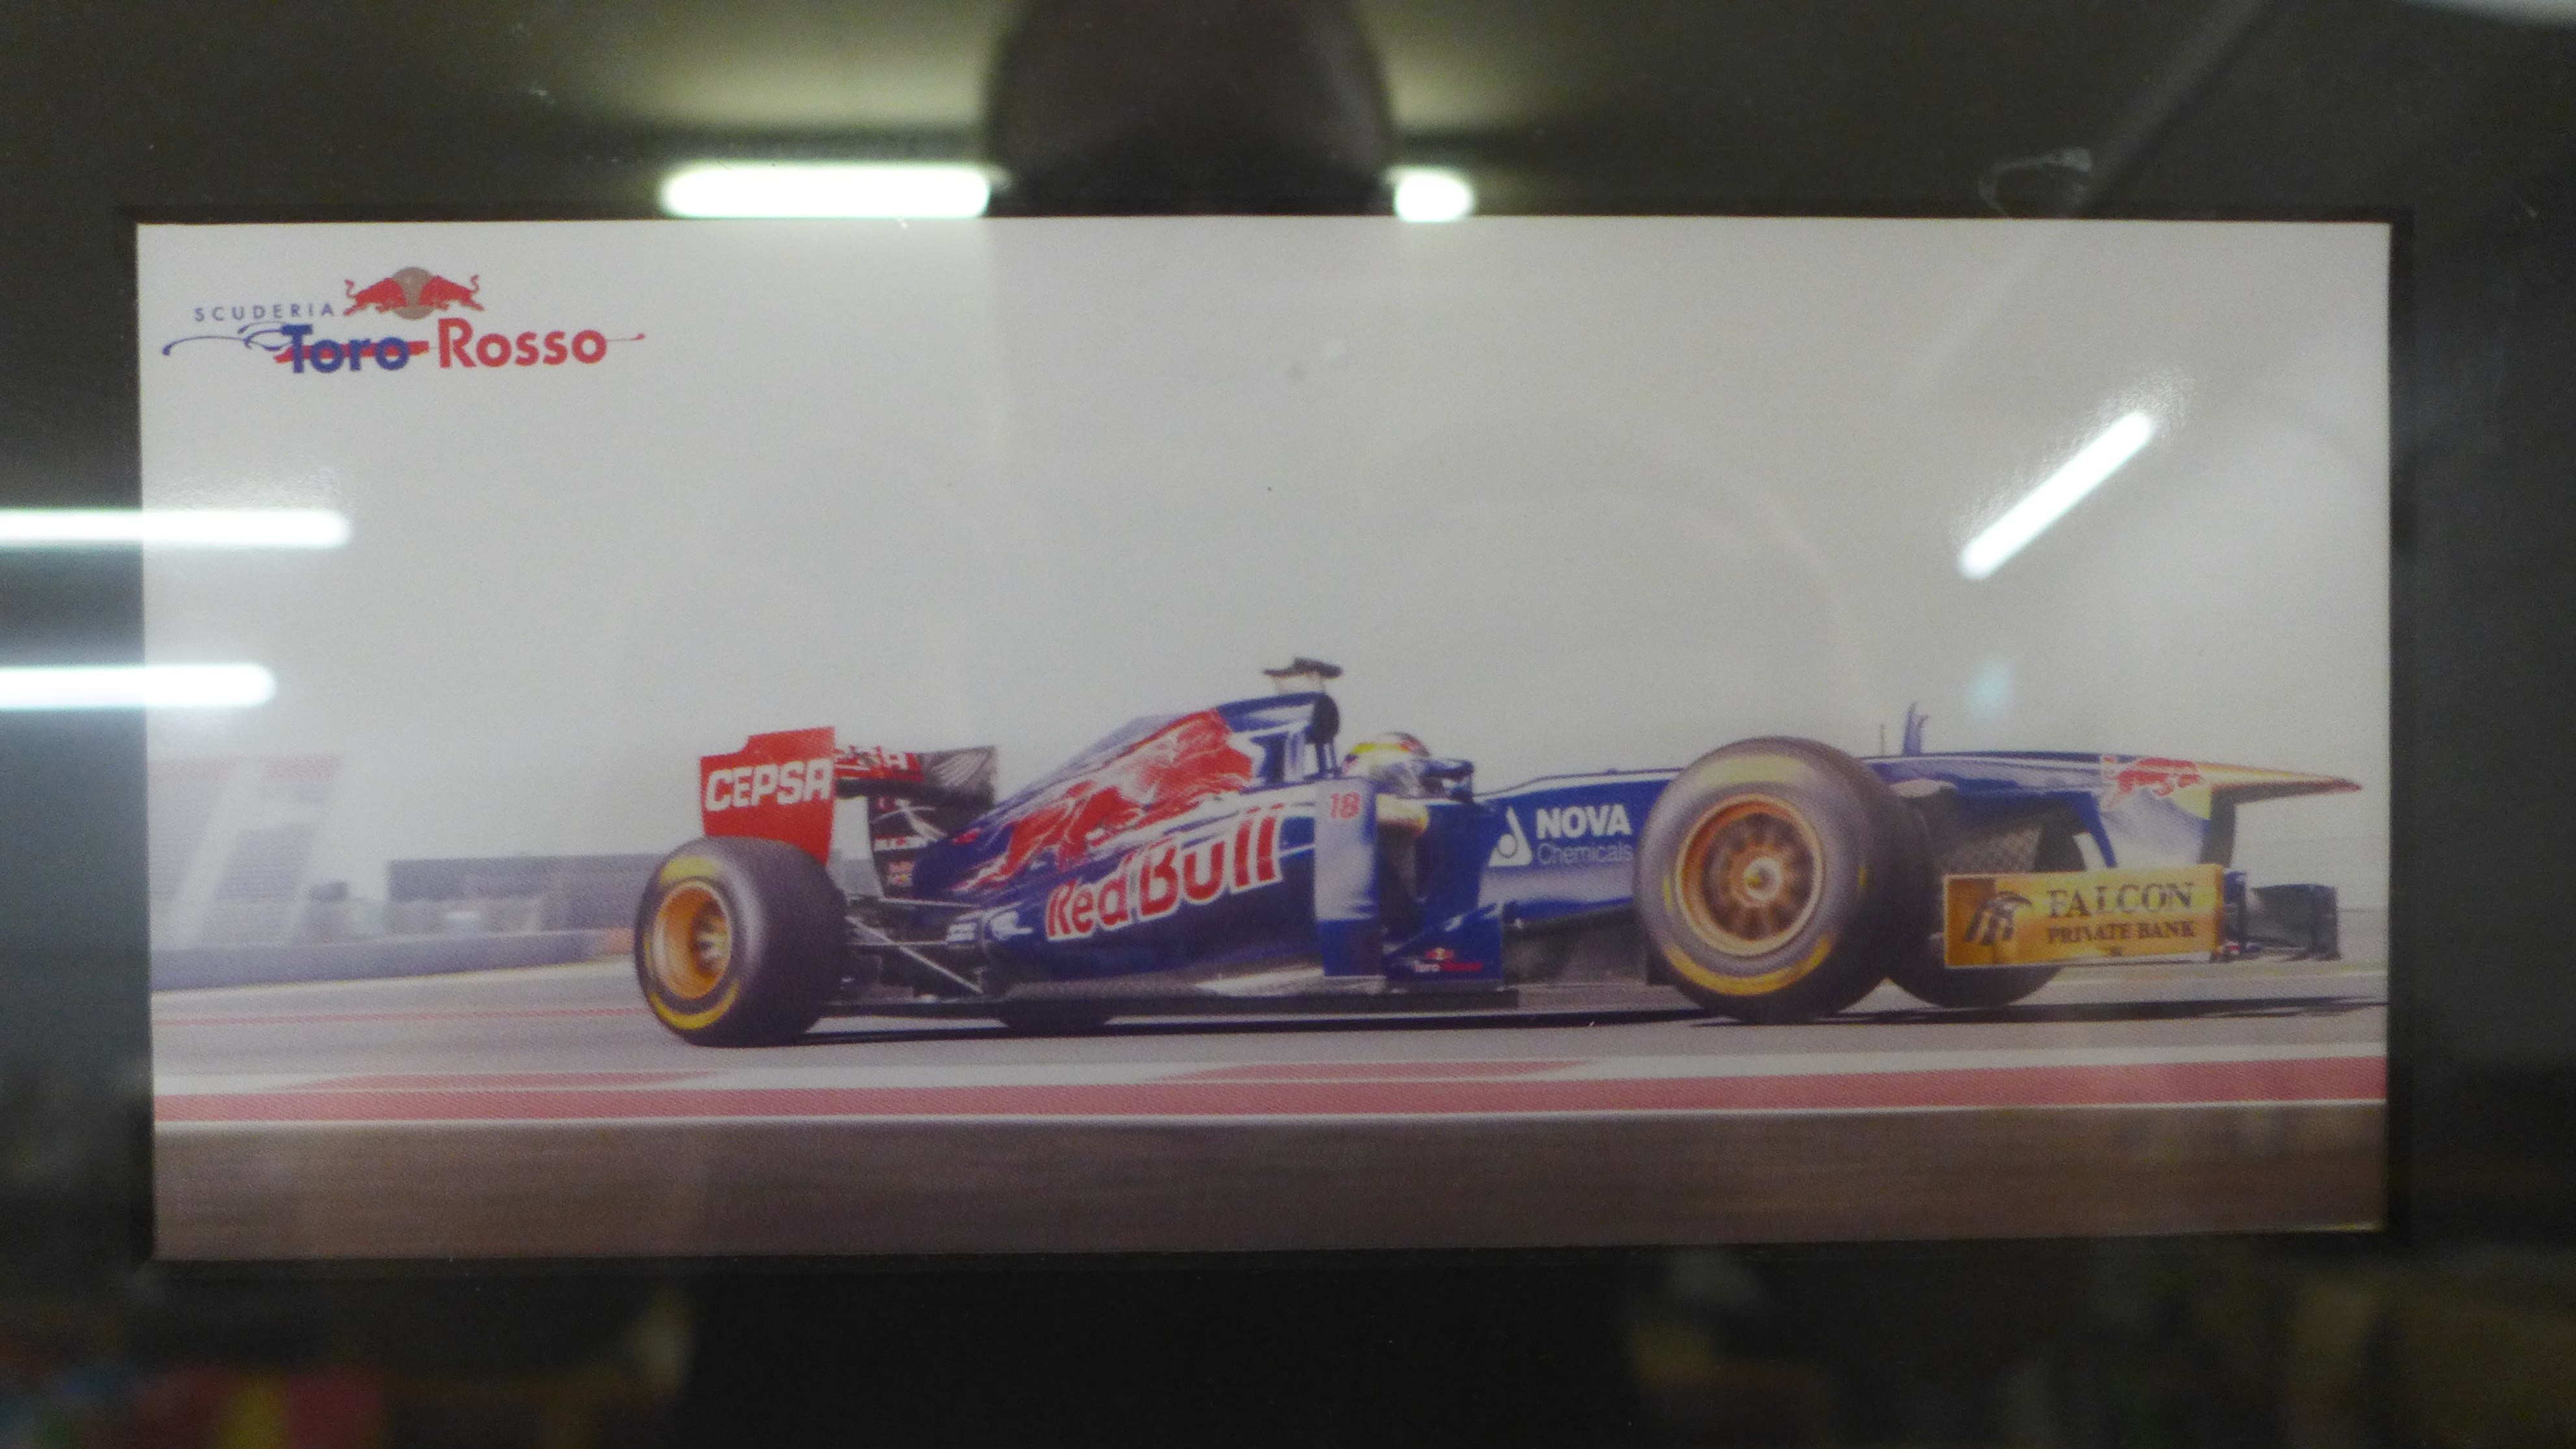 Three motor racing autograph displays, Jean-Eric Vergne, Mark Webber and Kimi Räikkönen, each with - Bild 5 aus 9